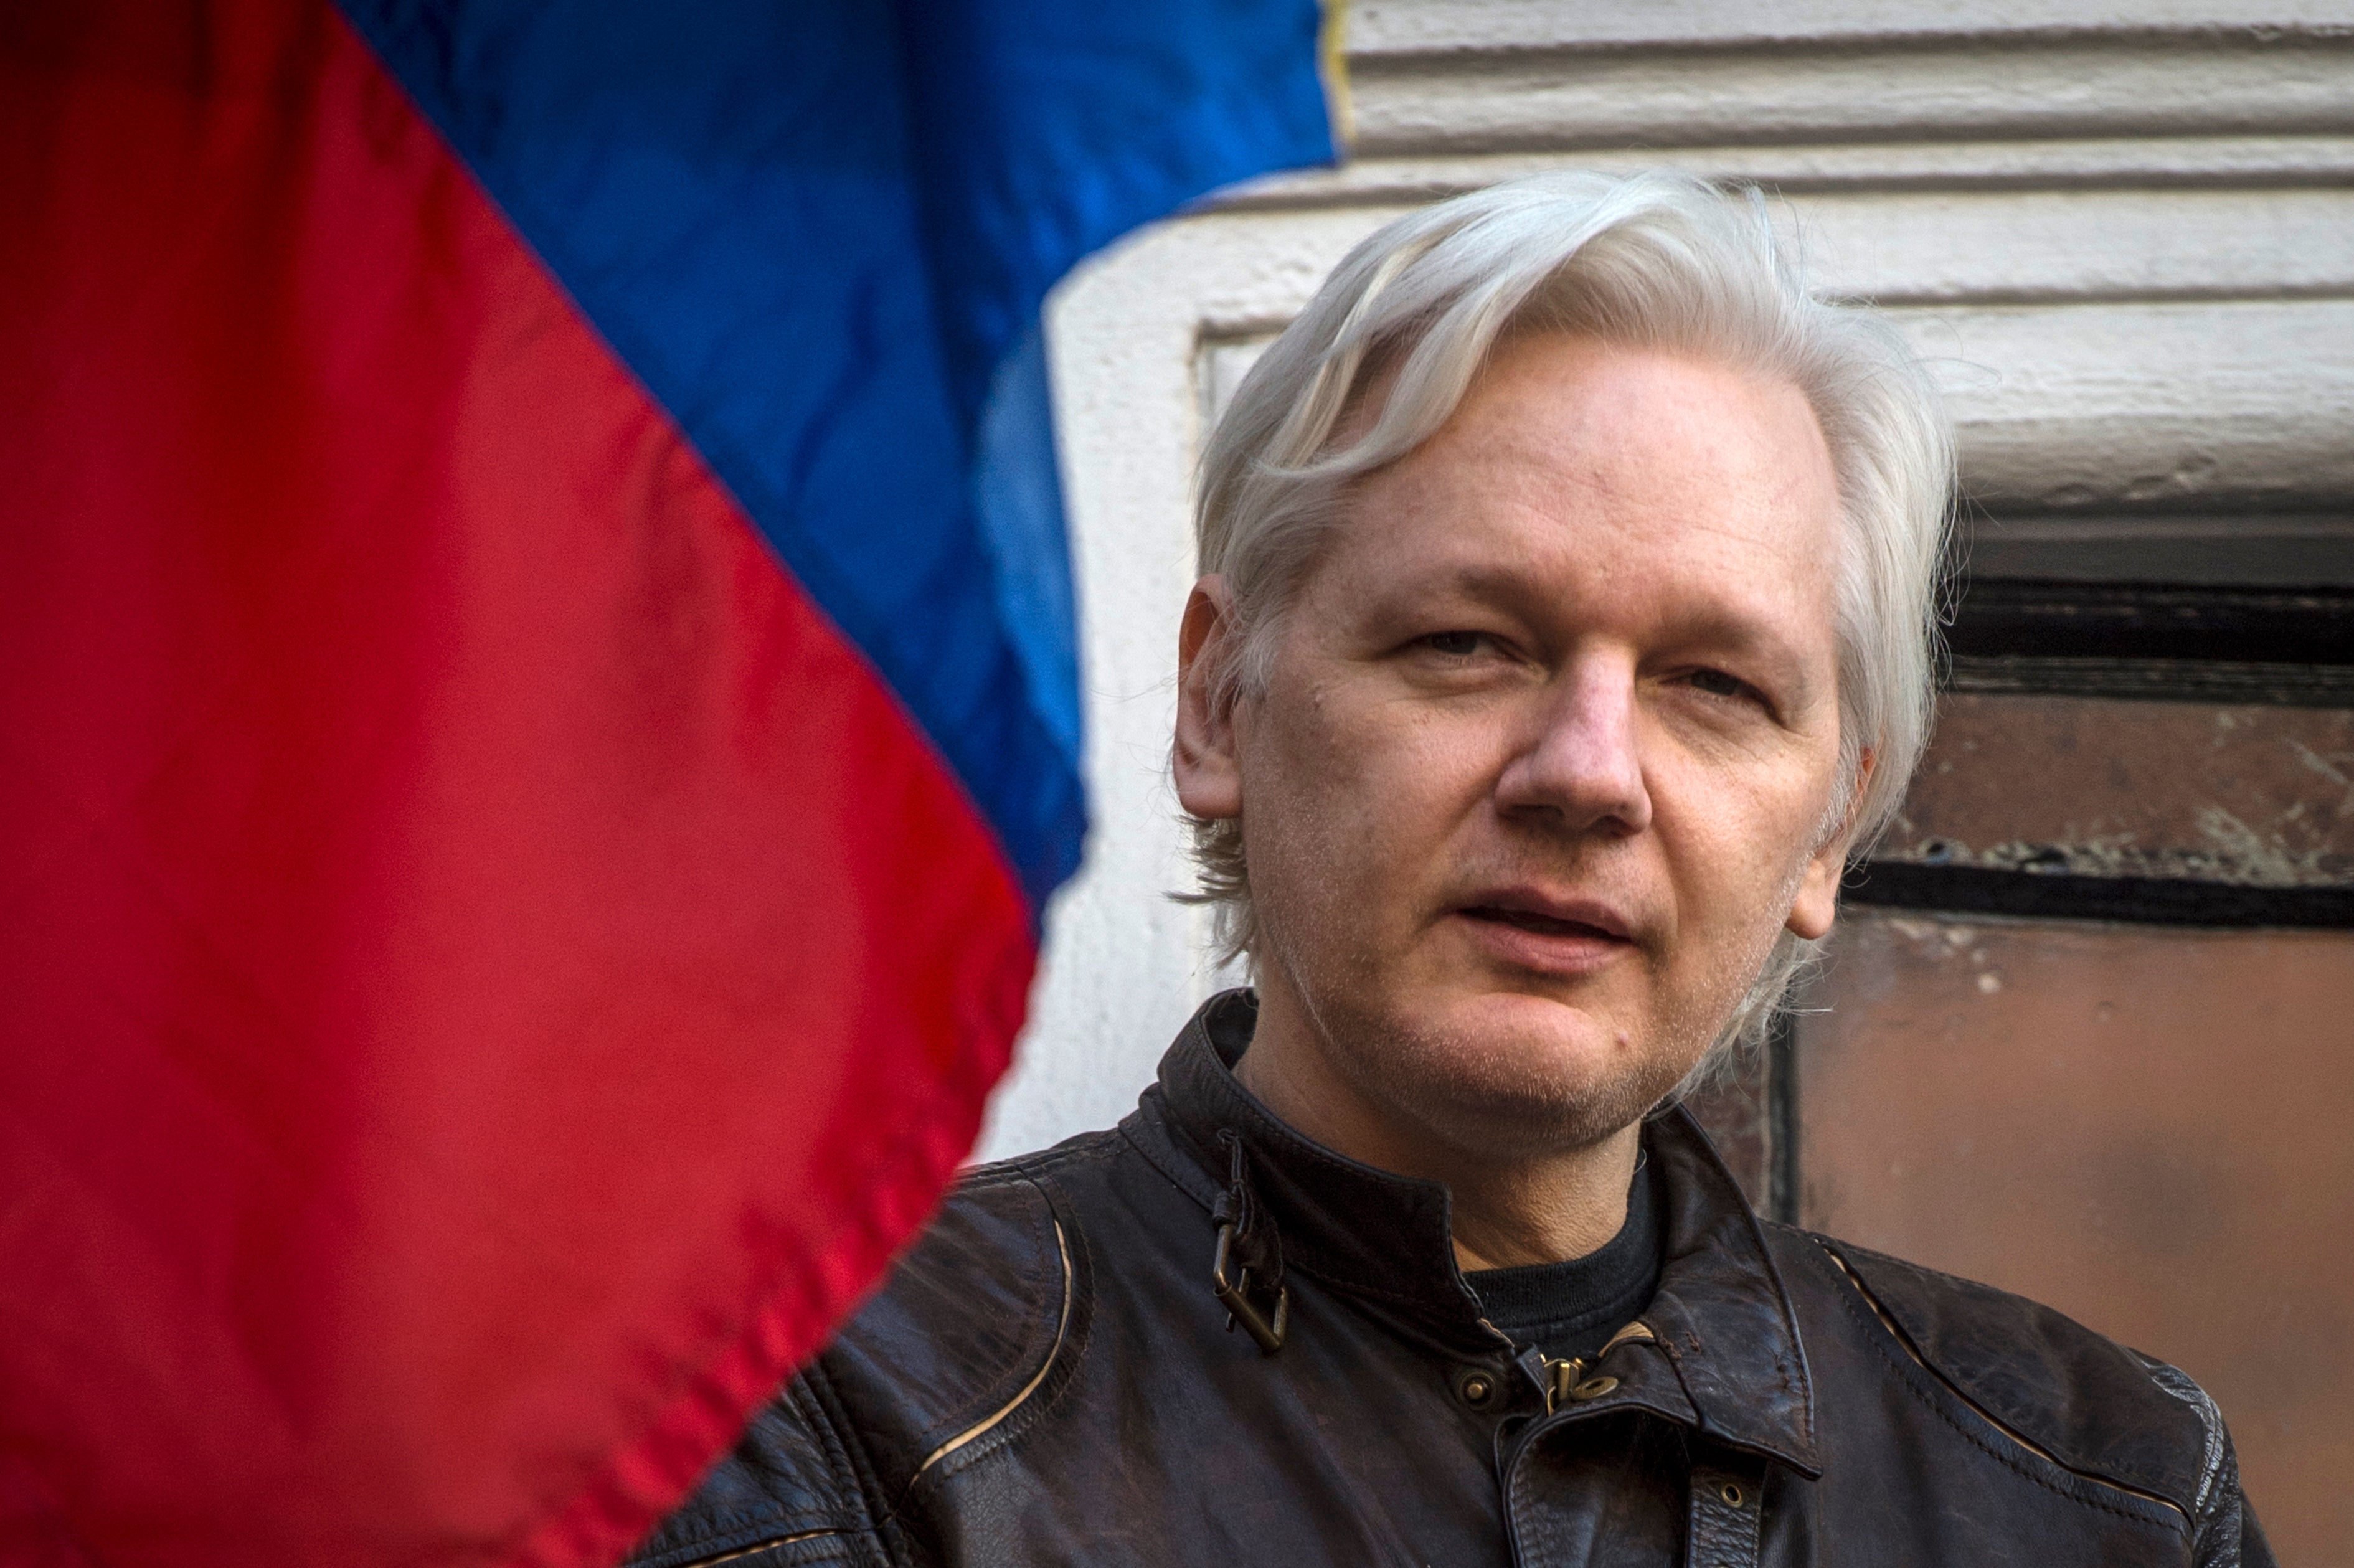 Julian Assange during his time at the Ecuadorian embassy in London (PA)